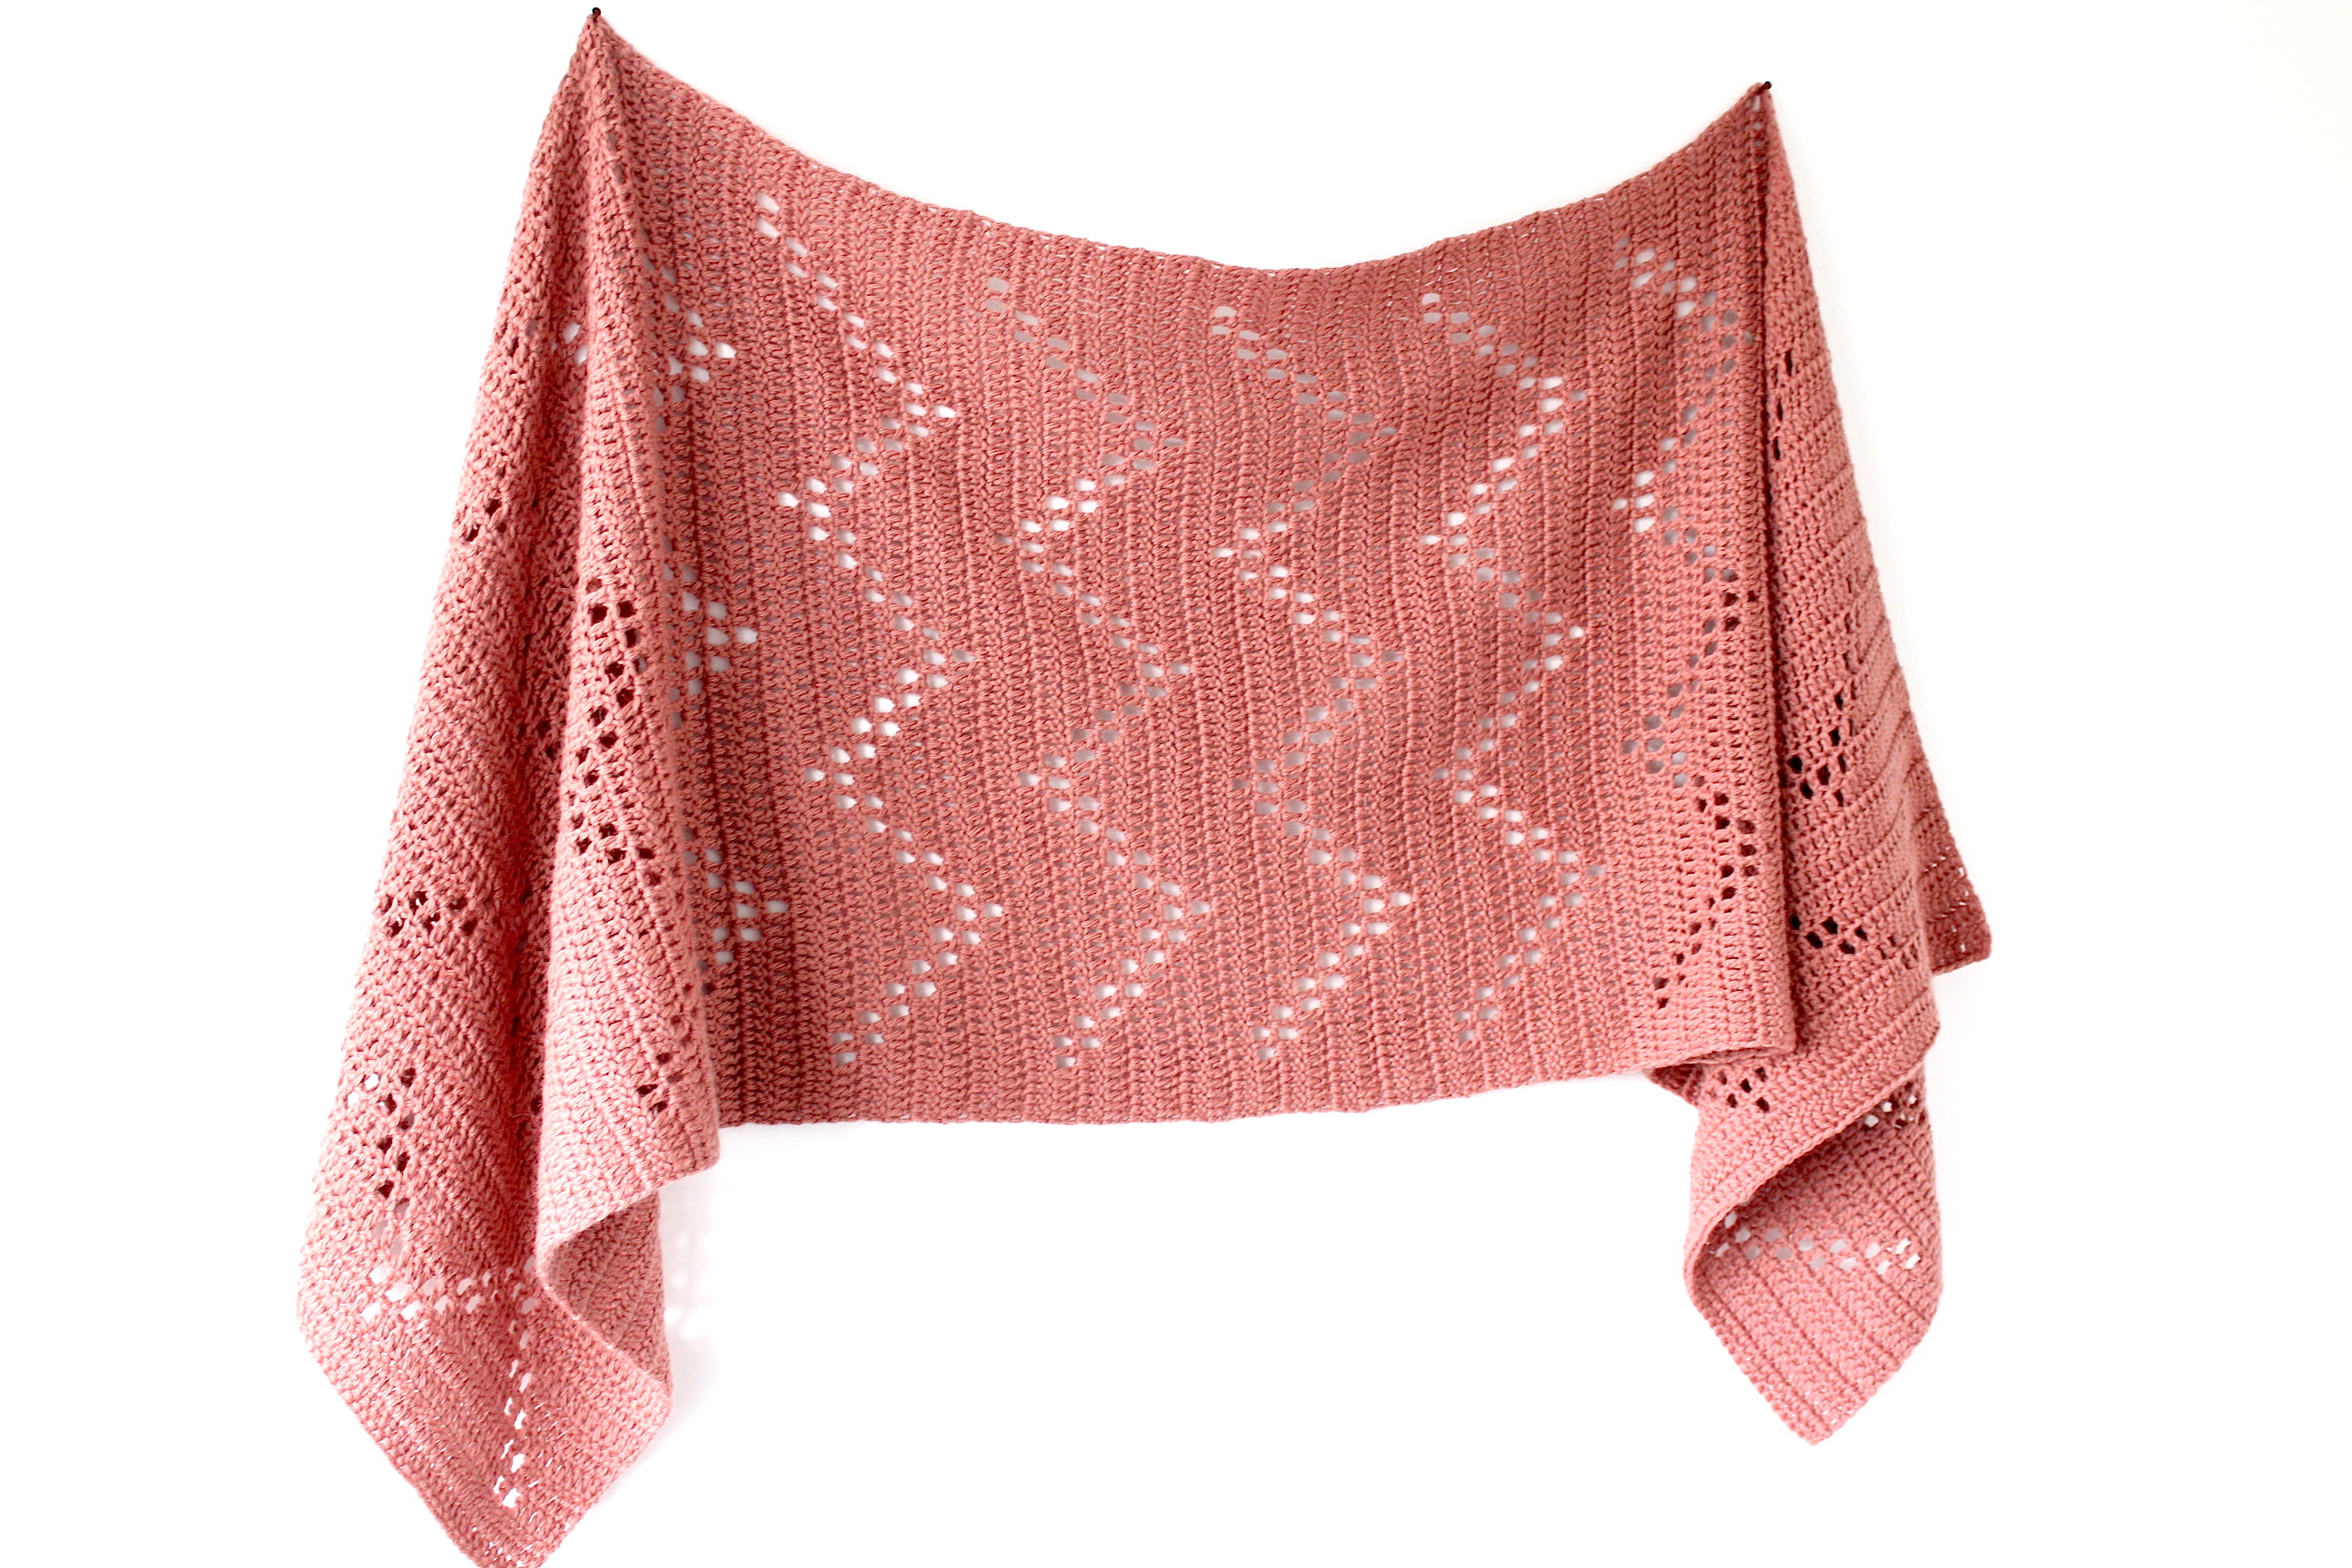 Devon Sideways Shawl - Free Crochet Pattern